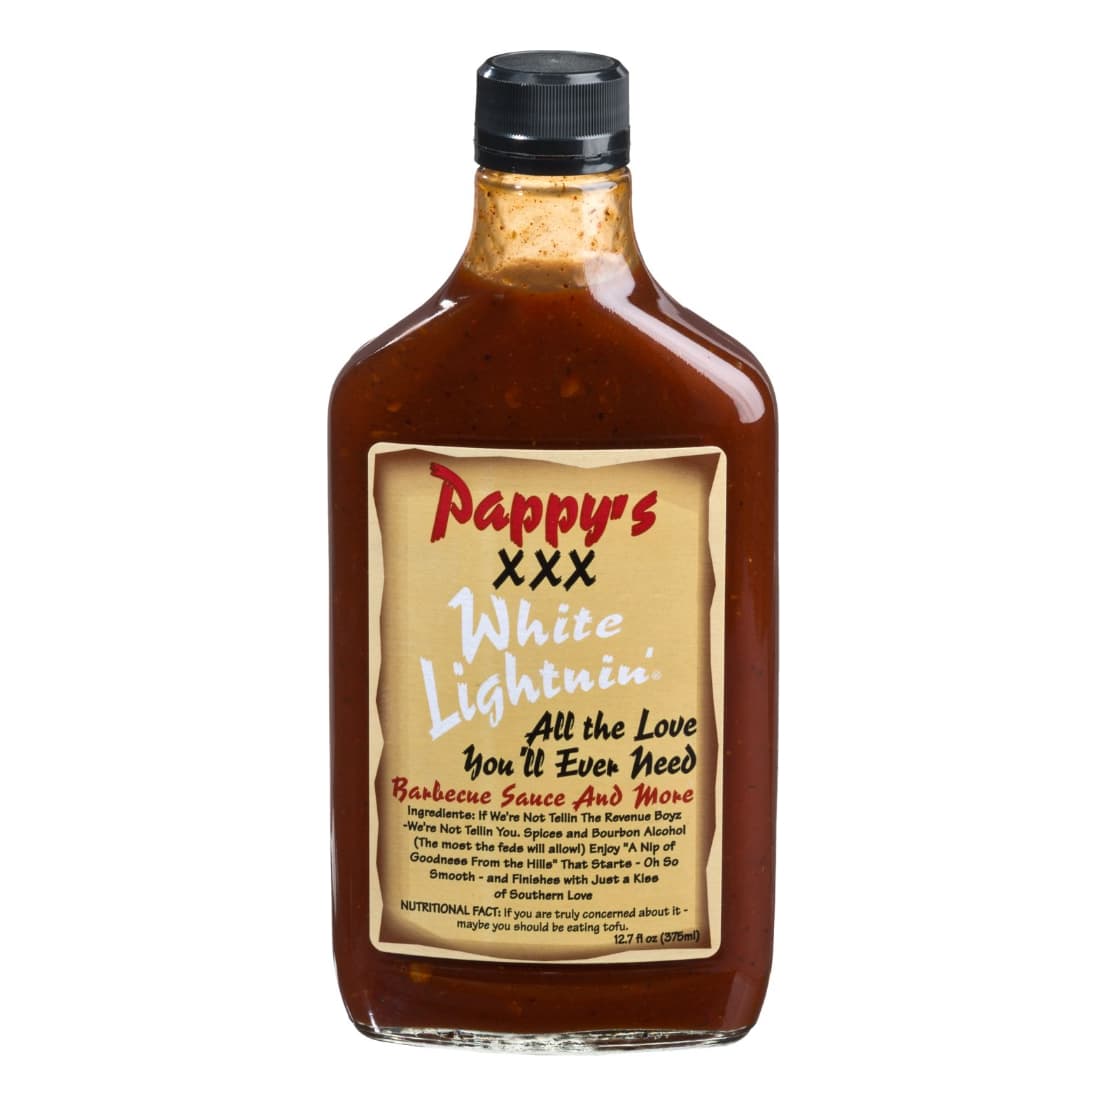 Pappy's XXX White Lightnin' Barbecue Sauce